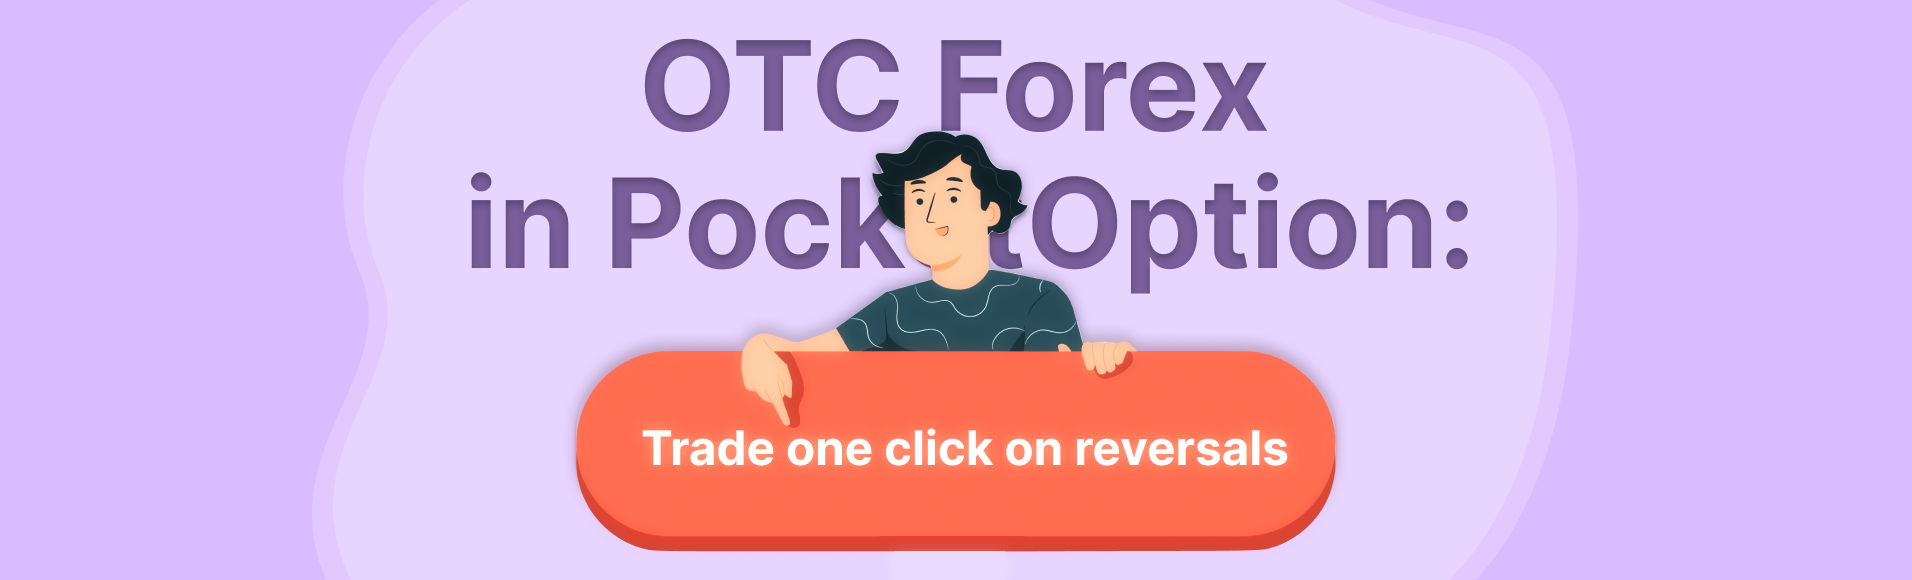 OTC Forex ใน PocketOption: ซื้อขายเพียงคลิกเดียวเมื่อกลับรายการ